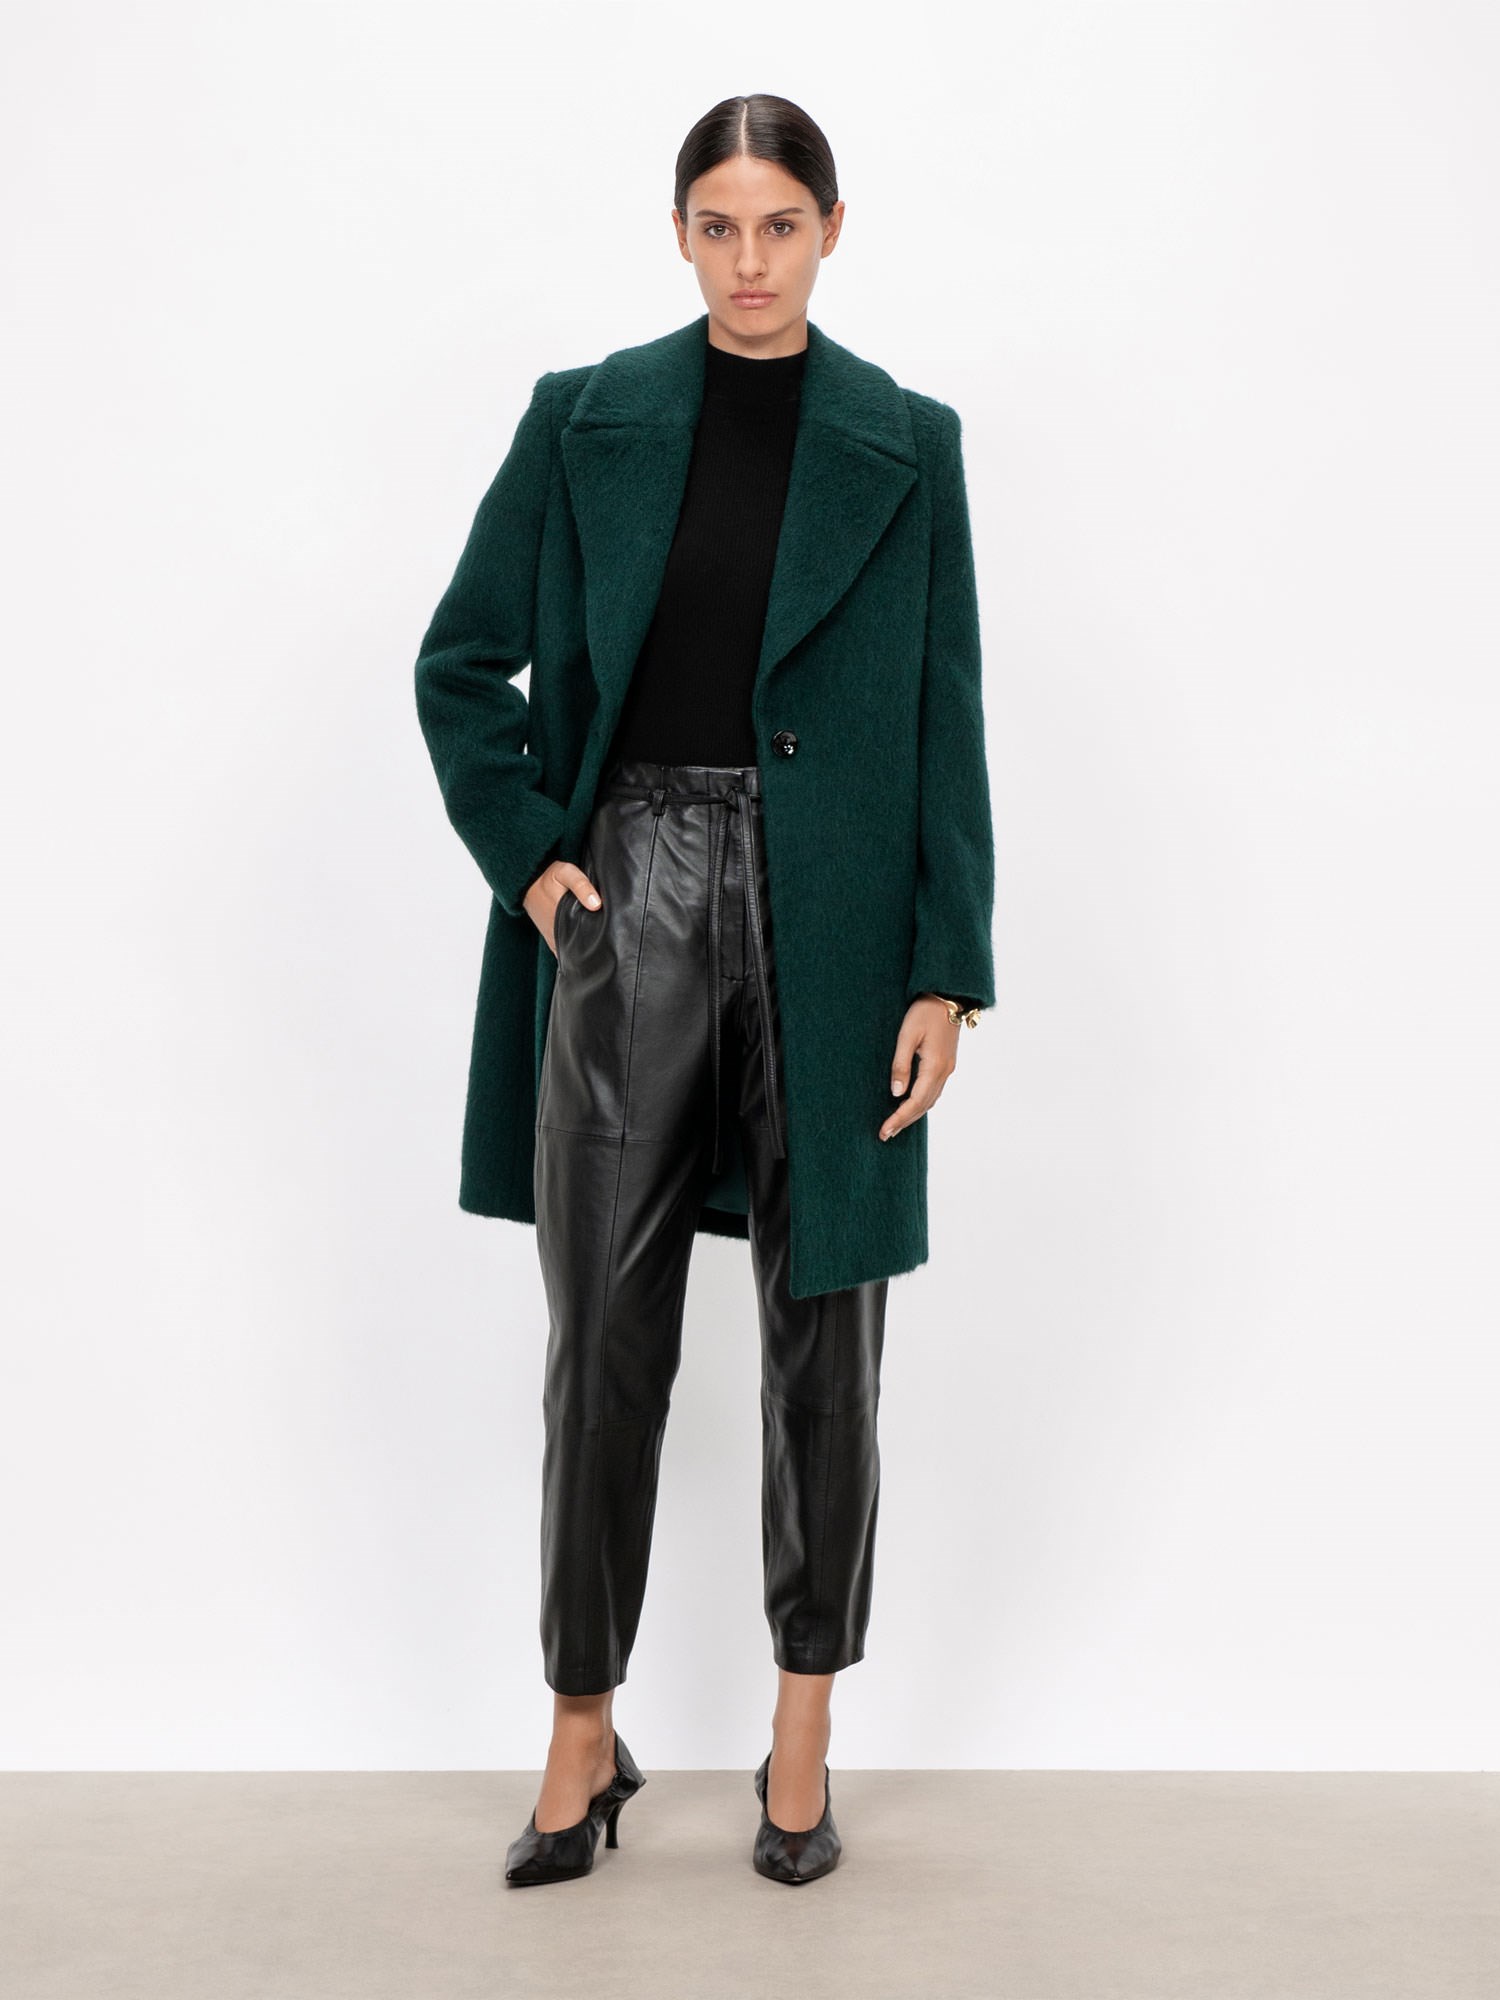 Brushed Mohair Coat | Buy Jackets and Coats Online - Veronika Maine